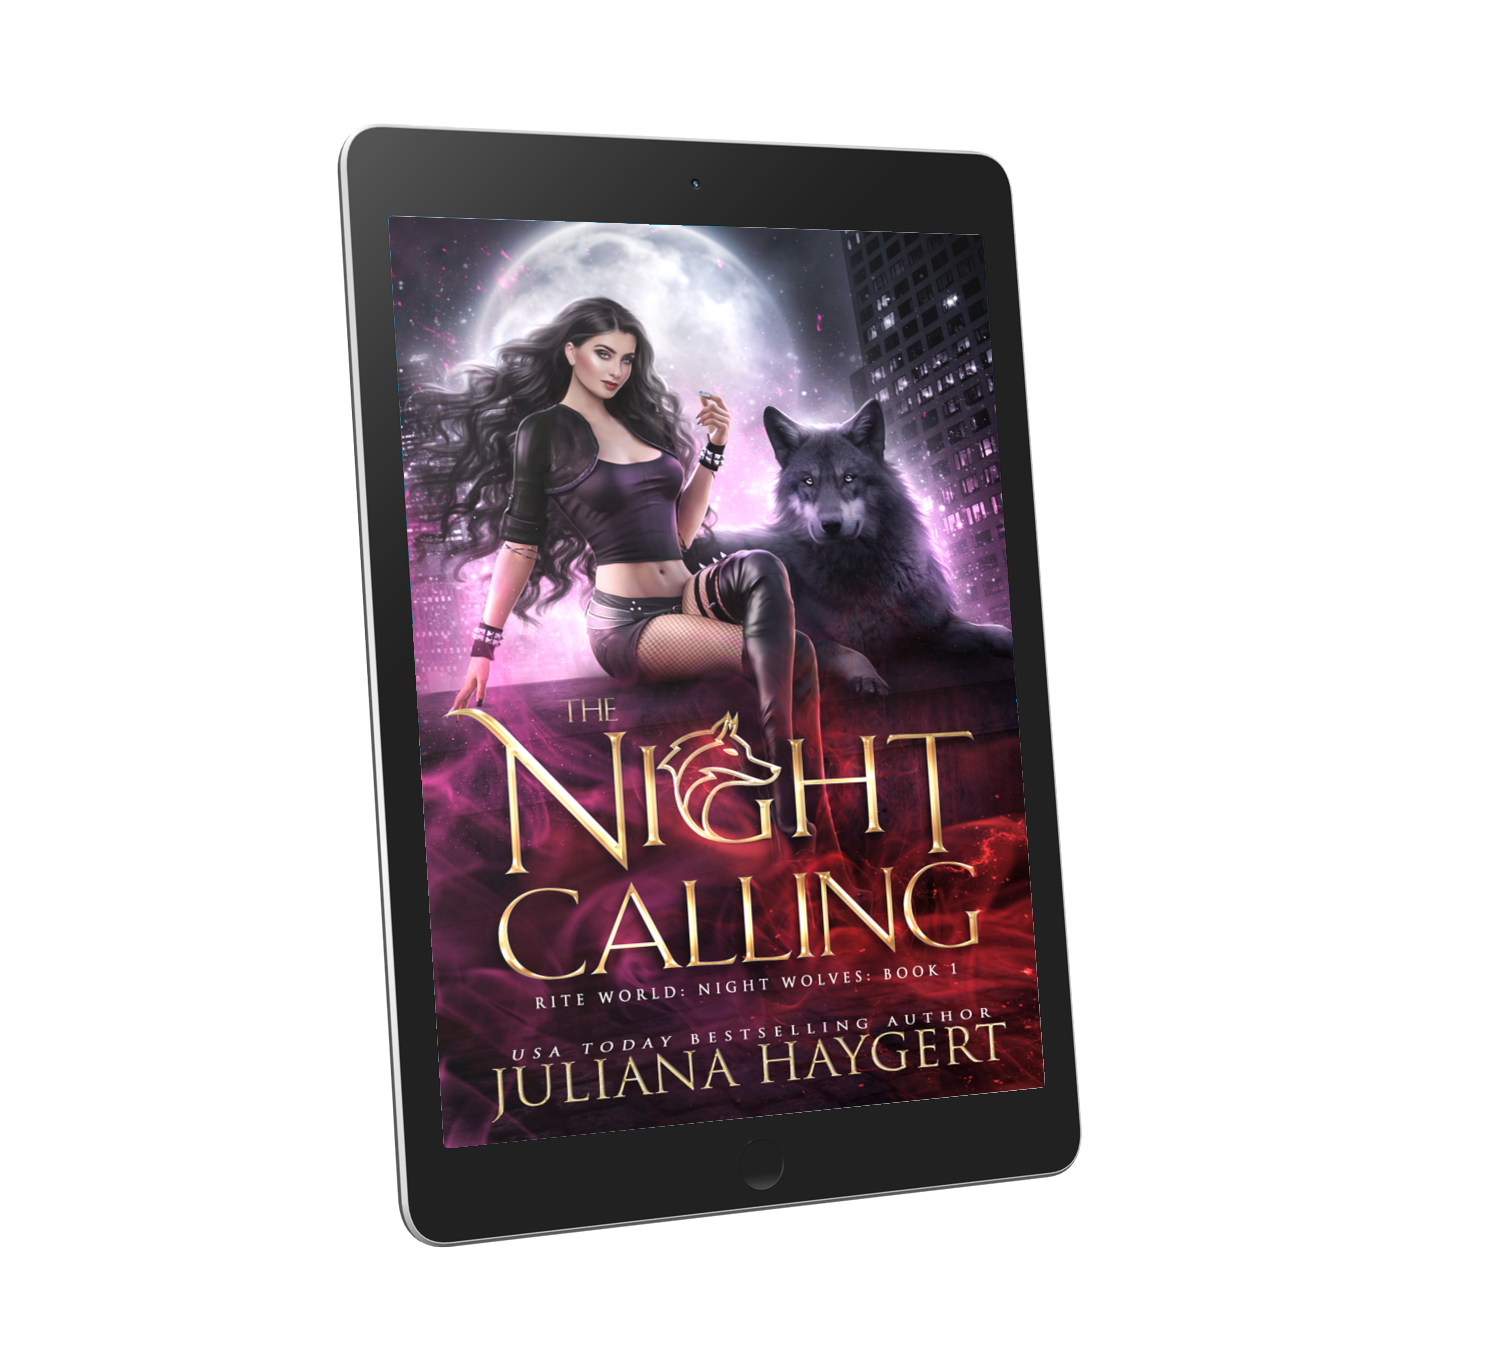 The Night Calling (Rite World: Night Wolves #1) by Juliana Haygert